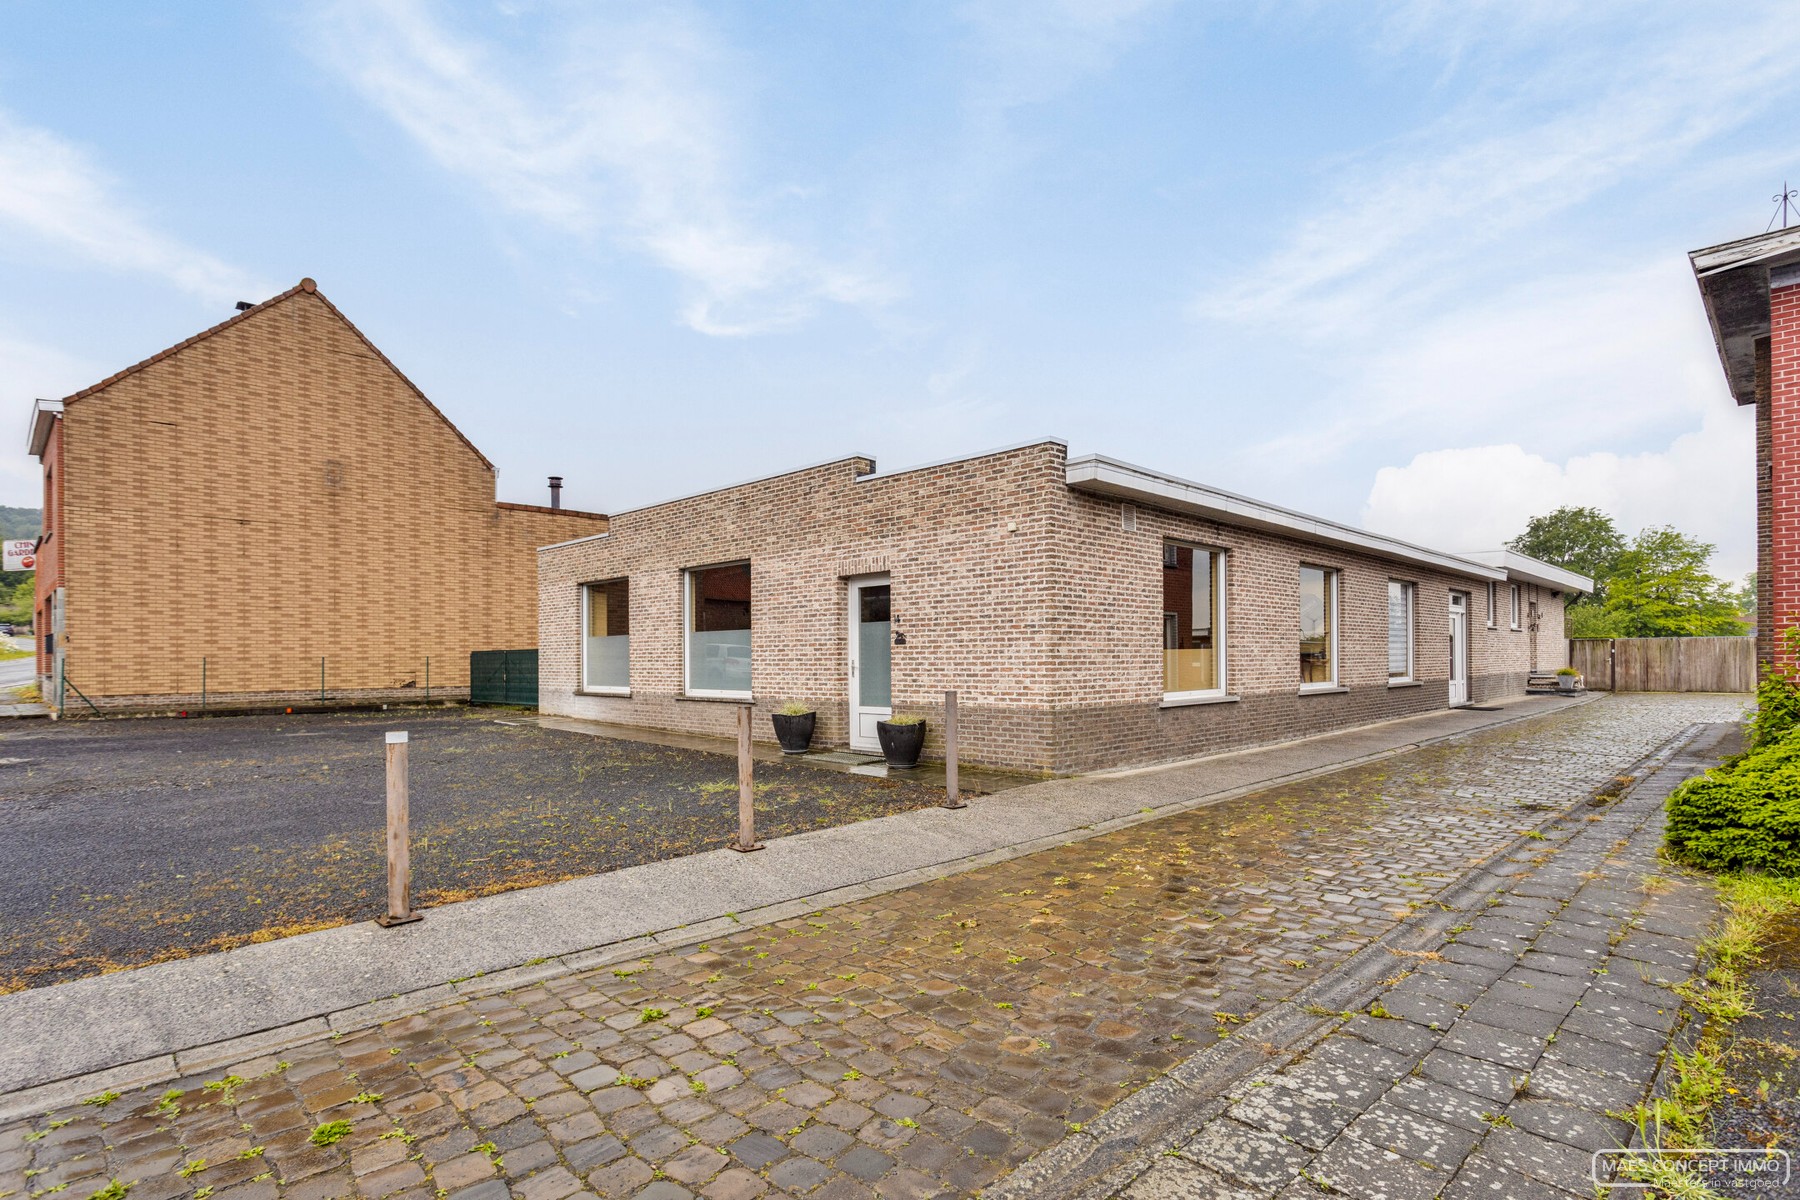 Handelspand met aanpalende woning in Kluisbergen foto 1